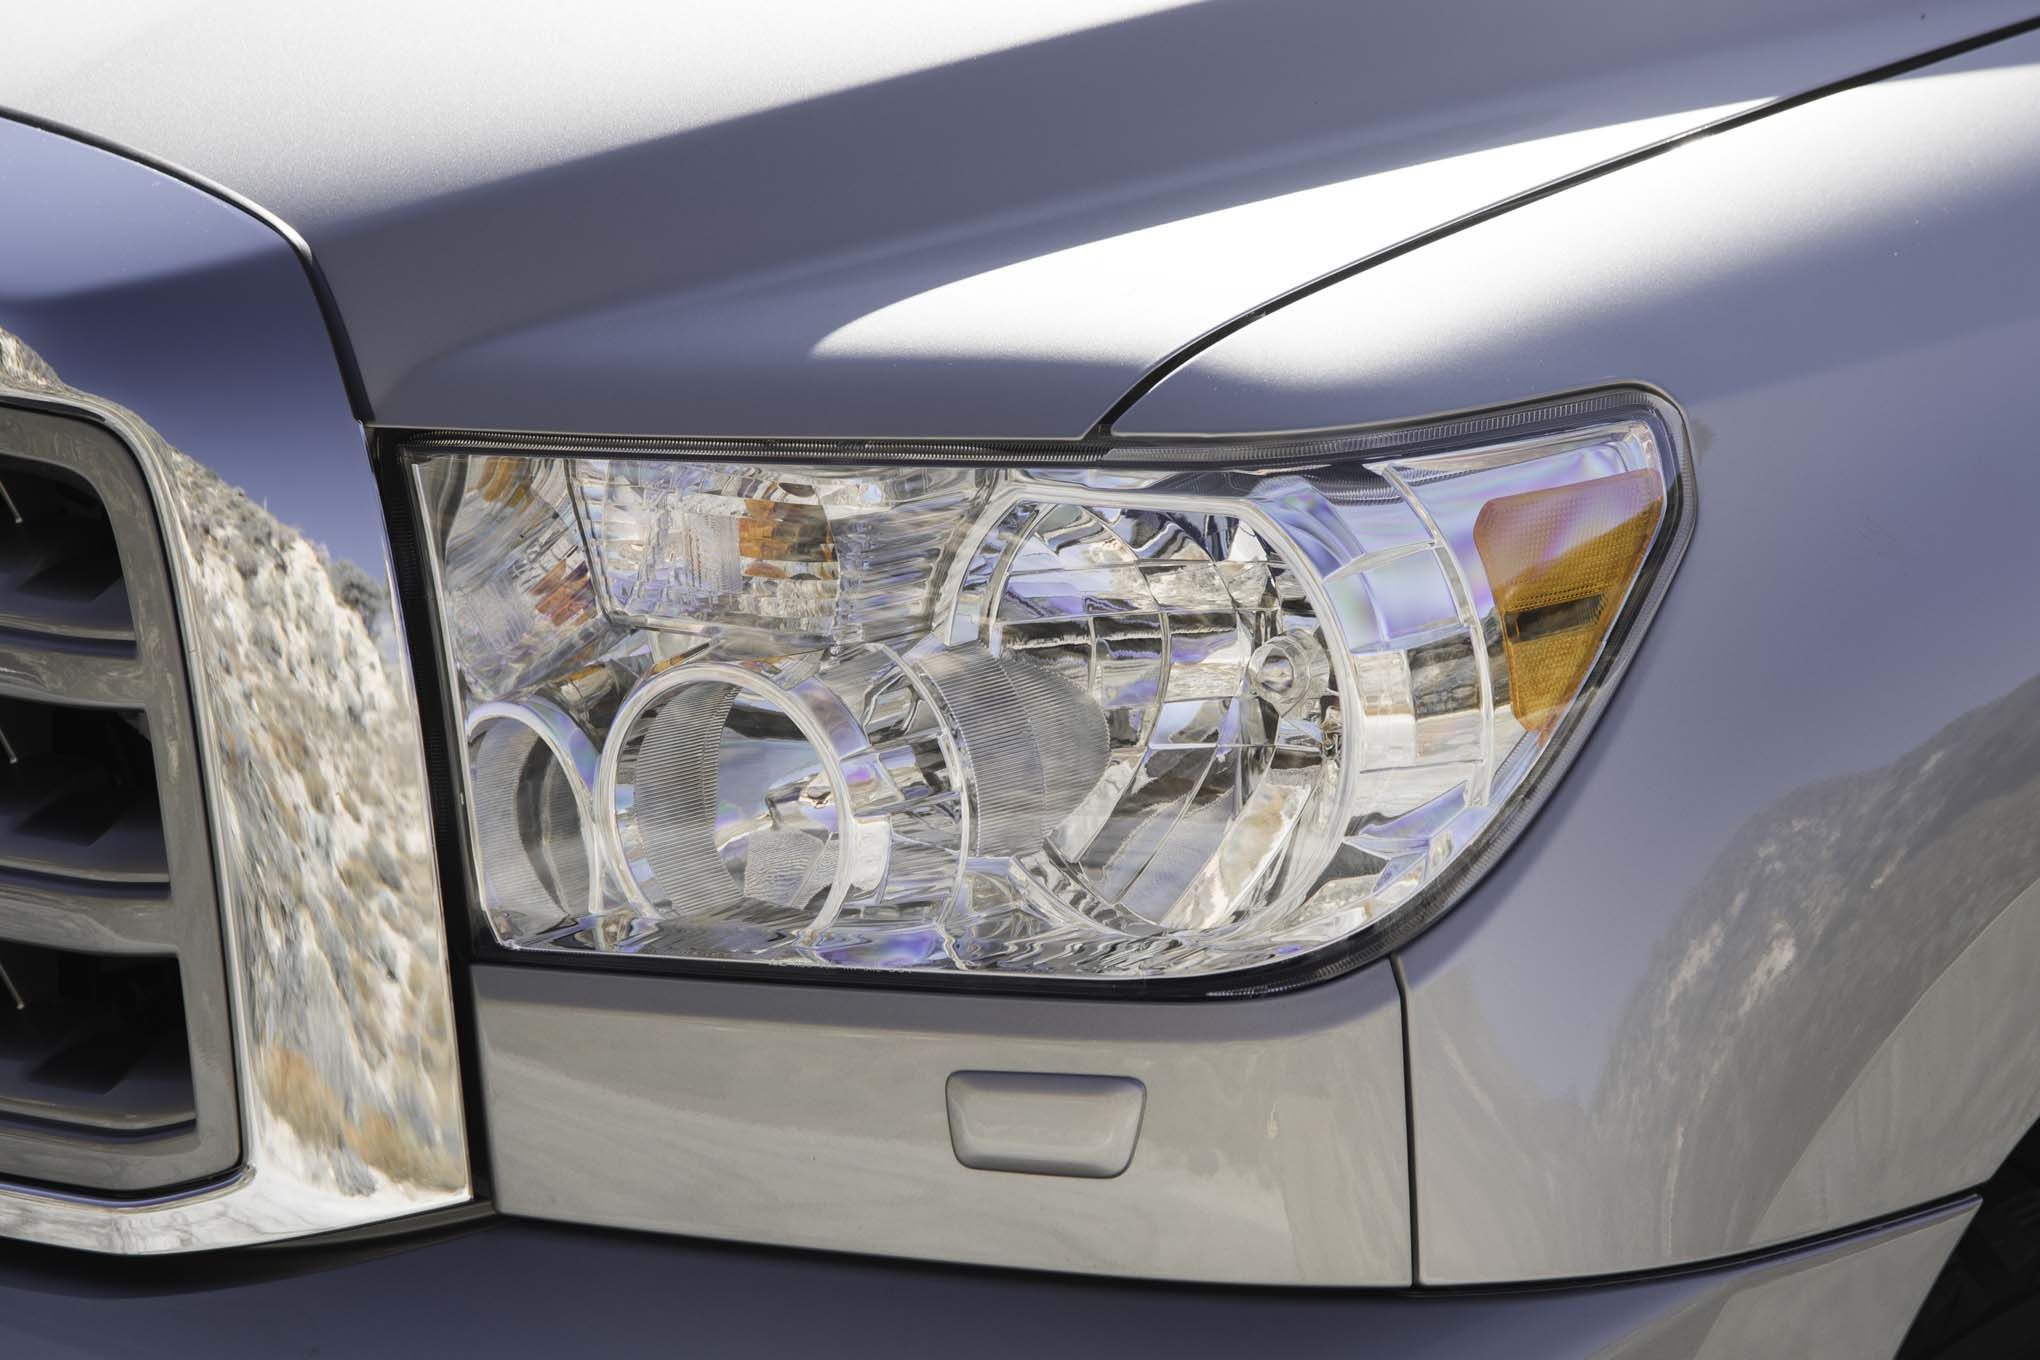 2017 Toyota Sequoia 4×4 Platinum Exterior View Headlight (View 10 of 26)